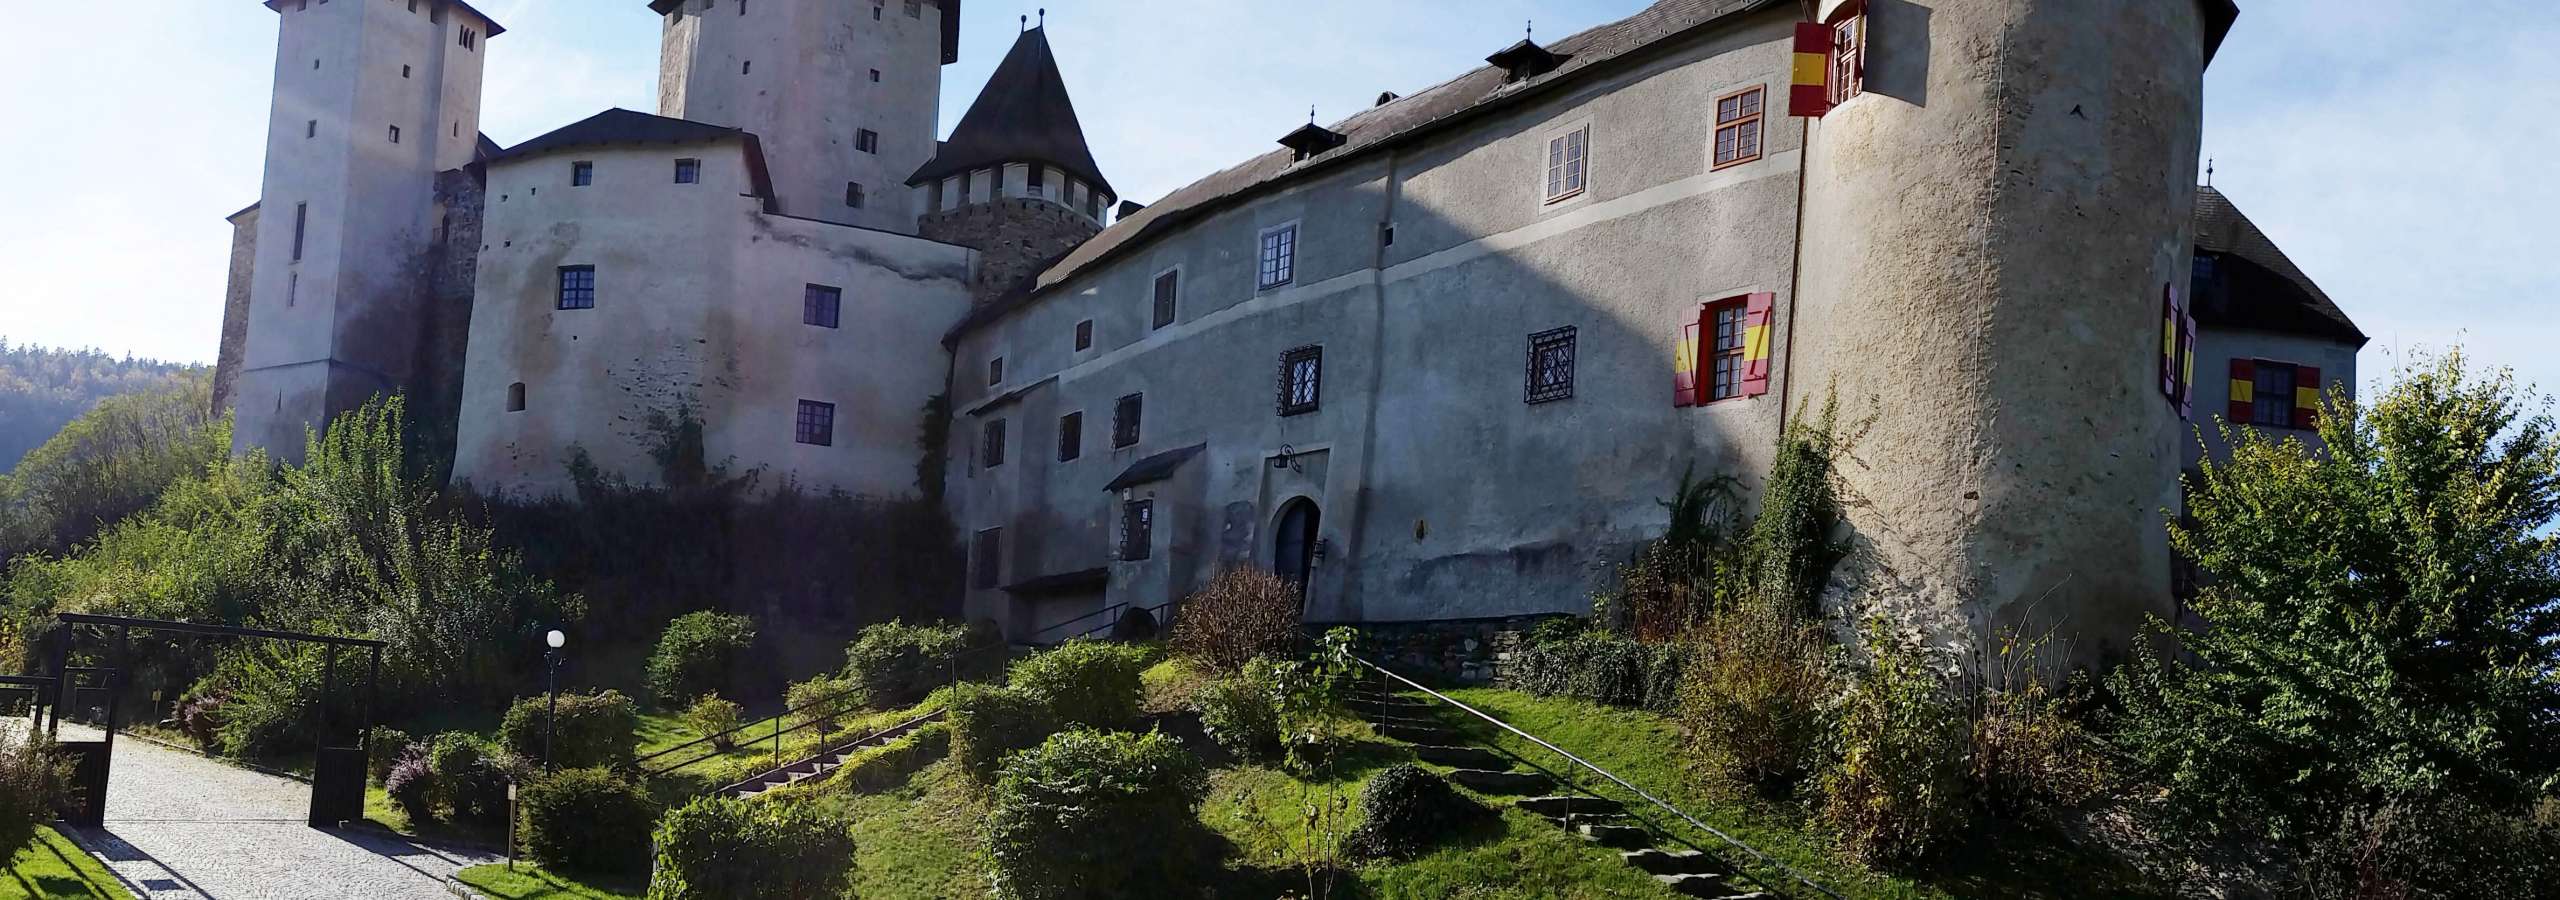 Burg Lockenhaus, Lockenhaus, Austria